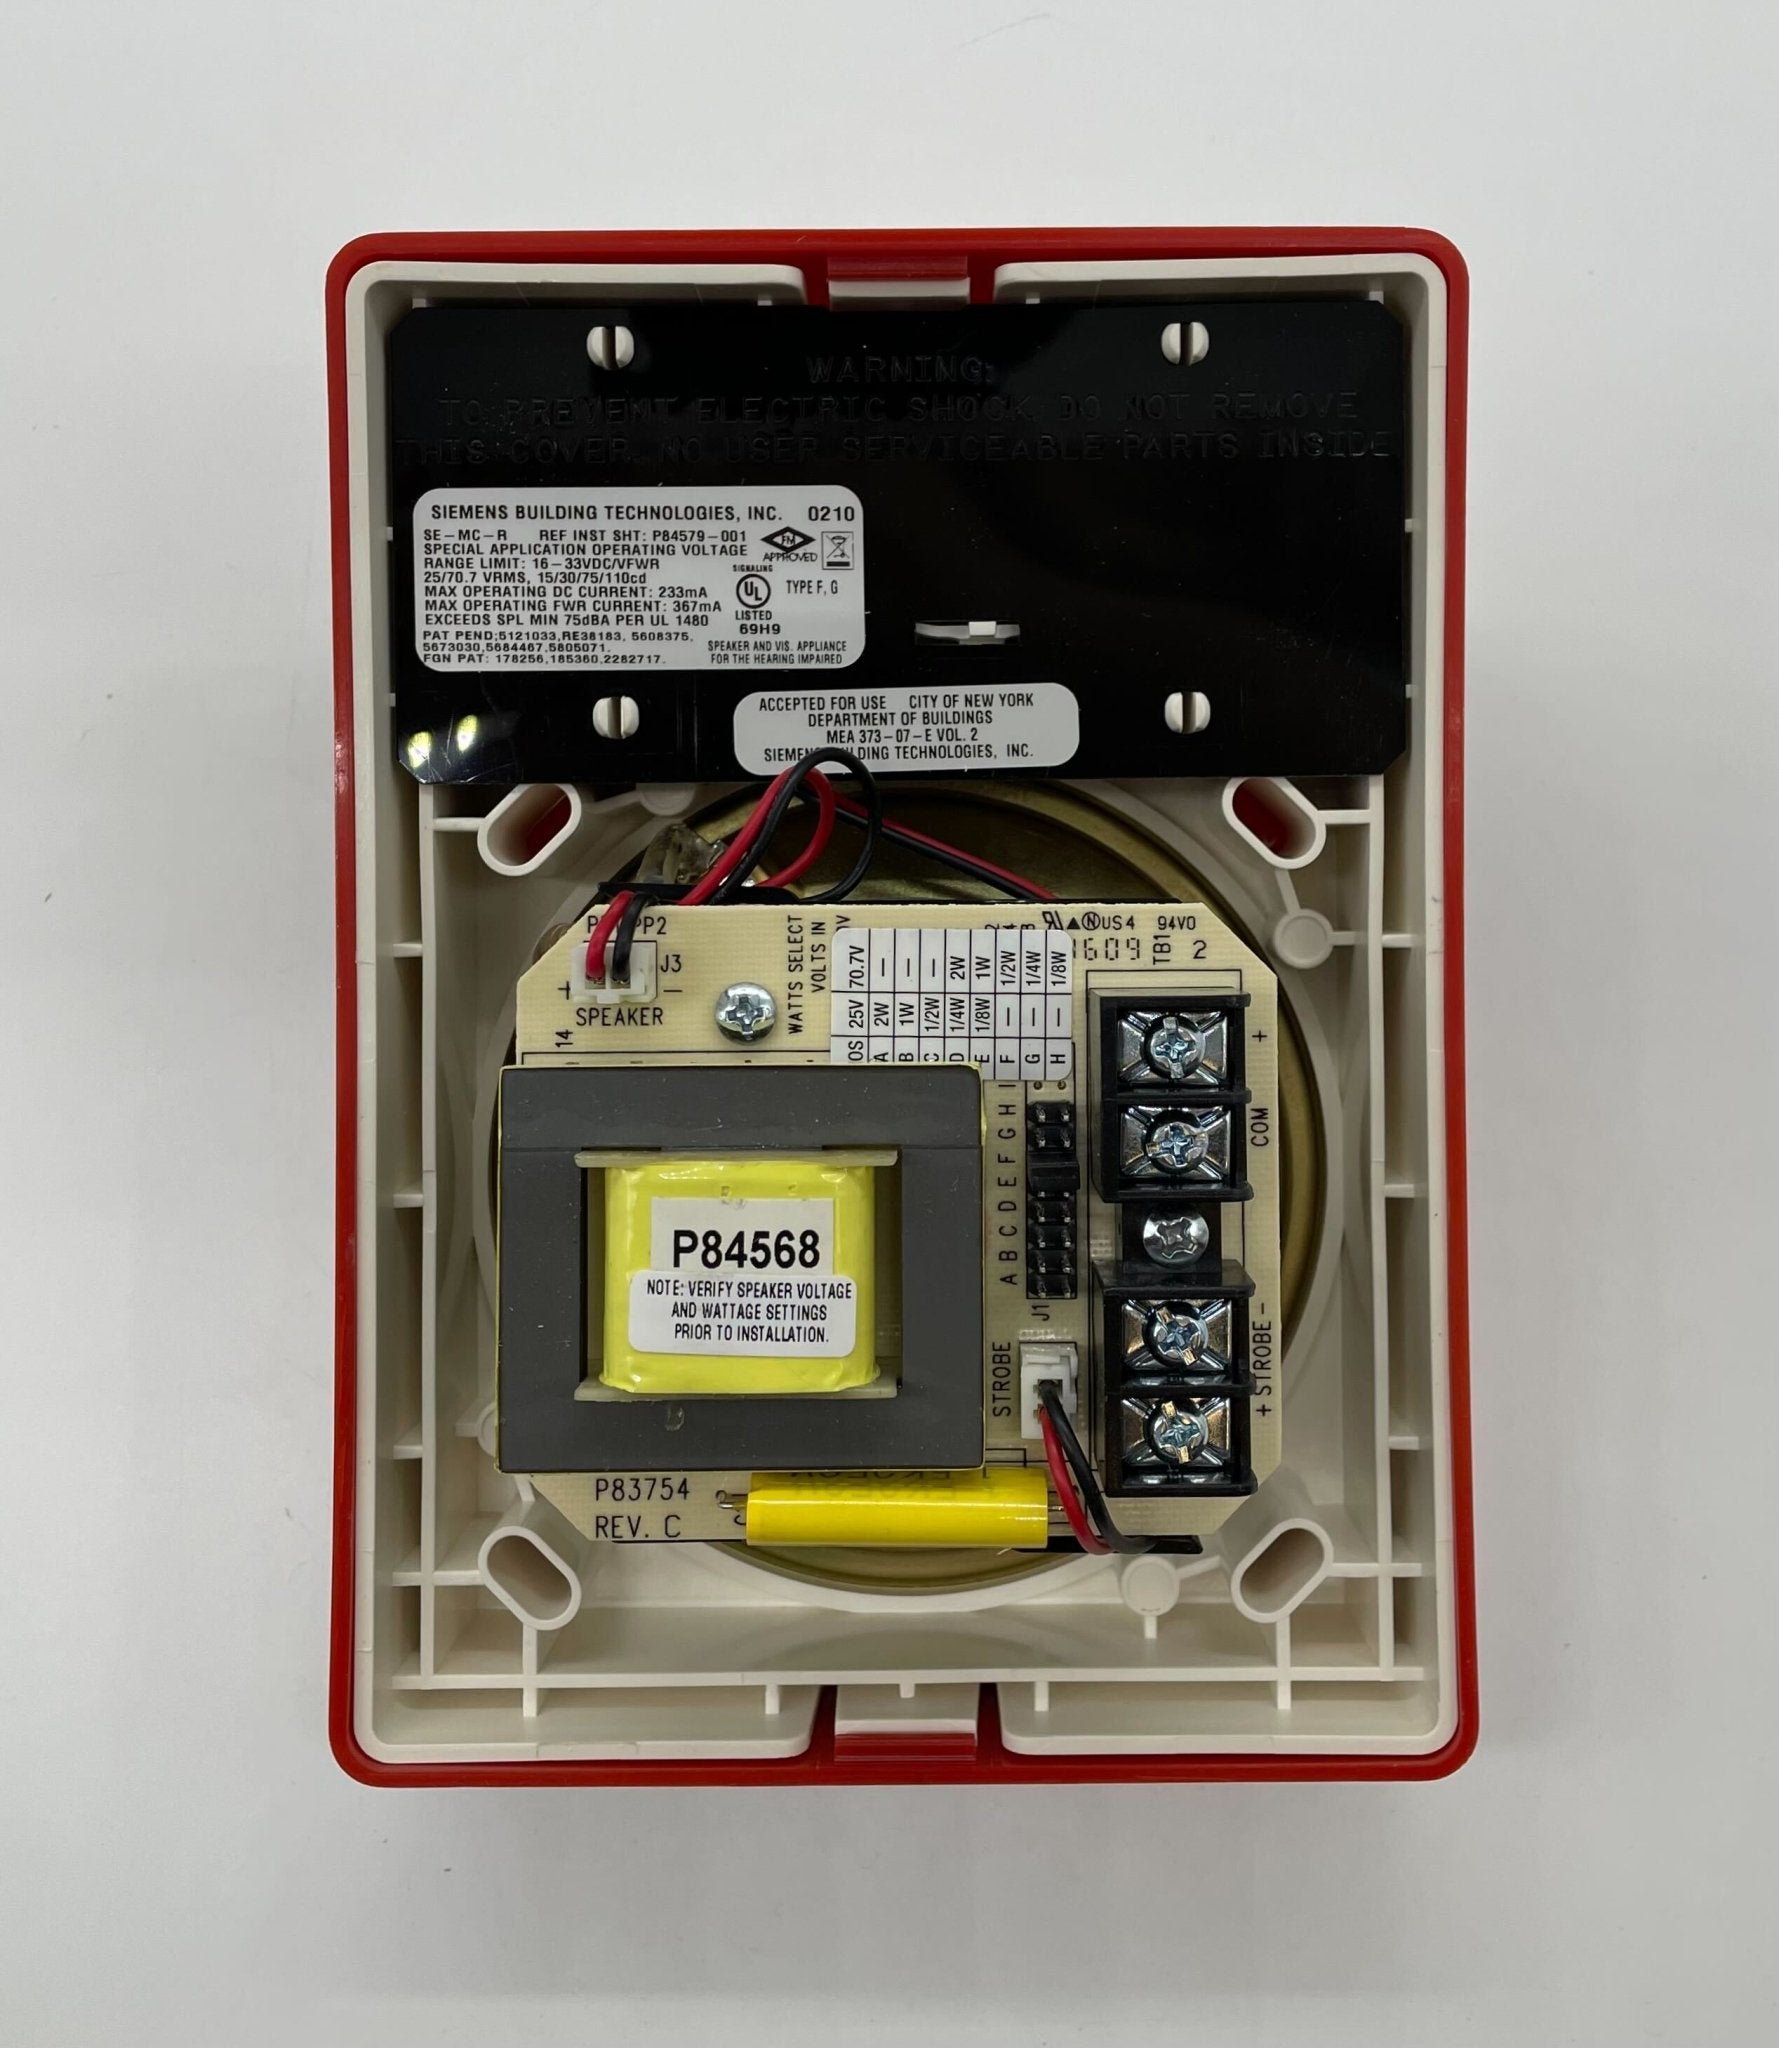 Siemens SE-MC-R Speaker Strobe Relay - The Fire Alarm Supplier